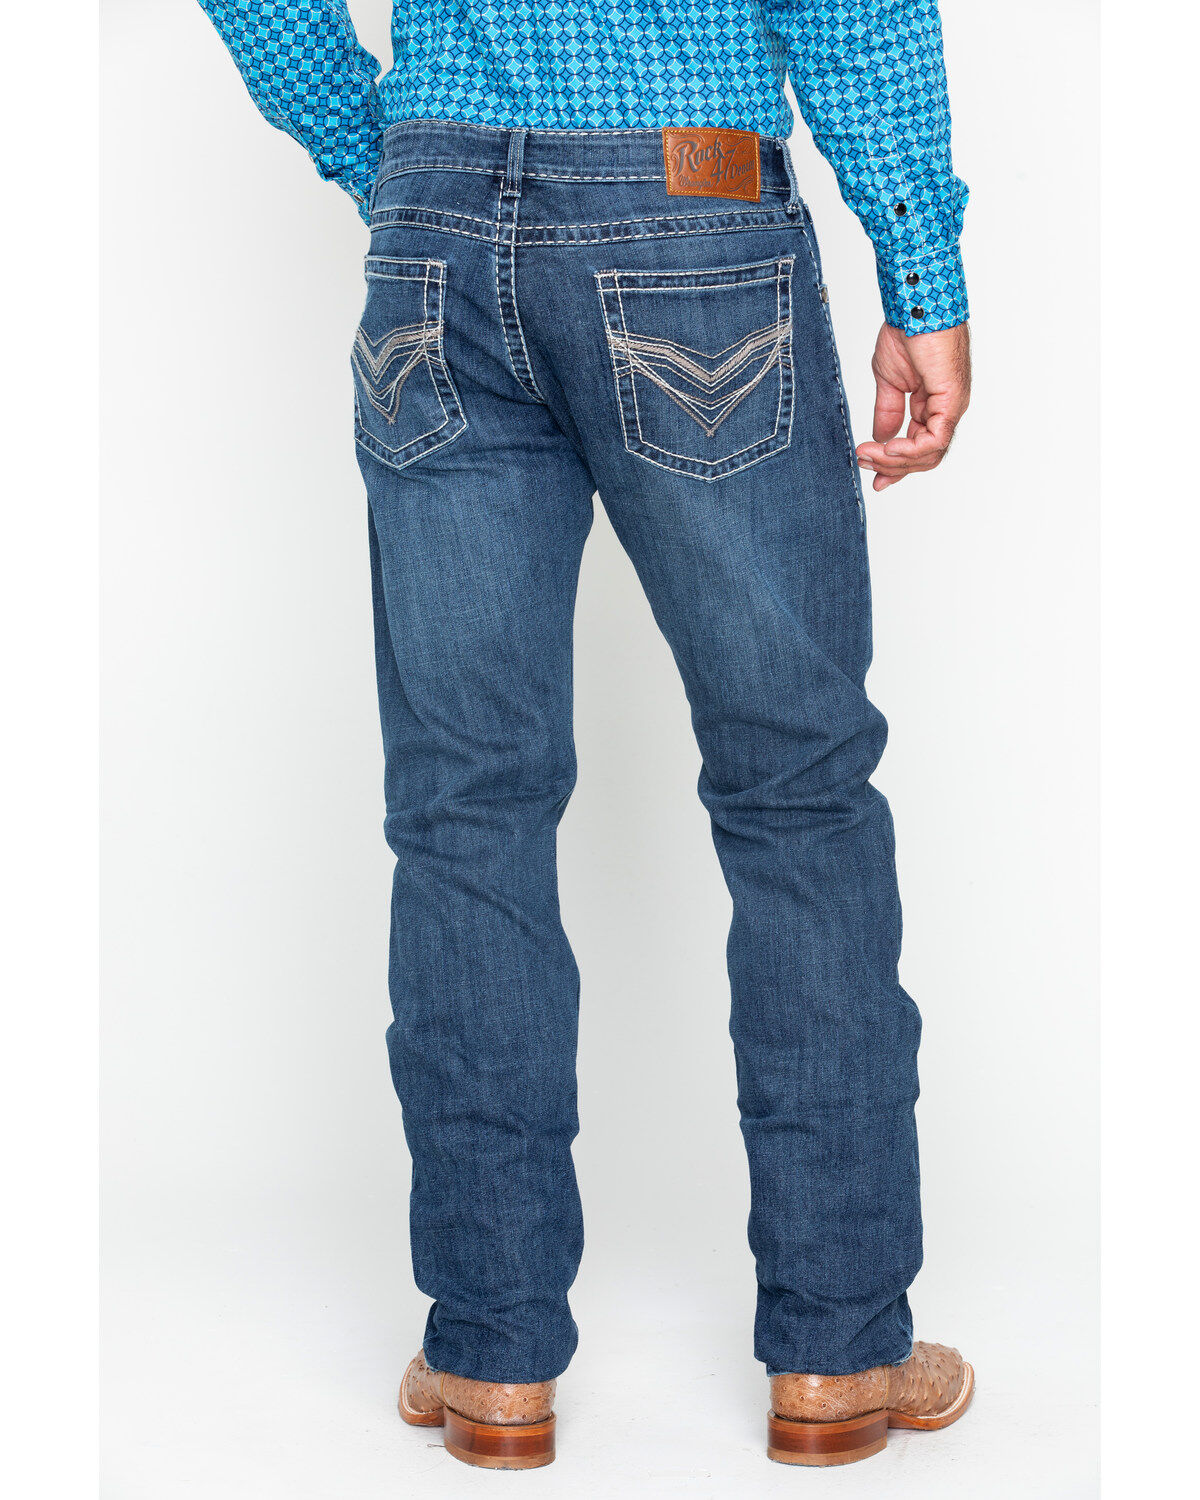 Wrangler Rock 47 Jeans Size Chart